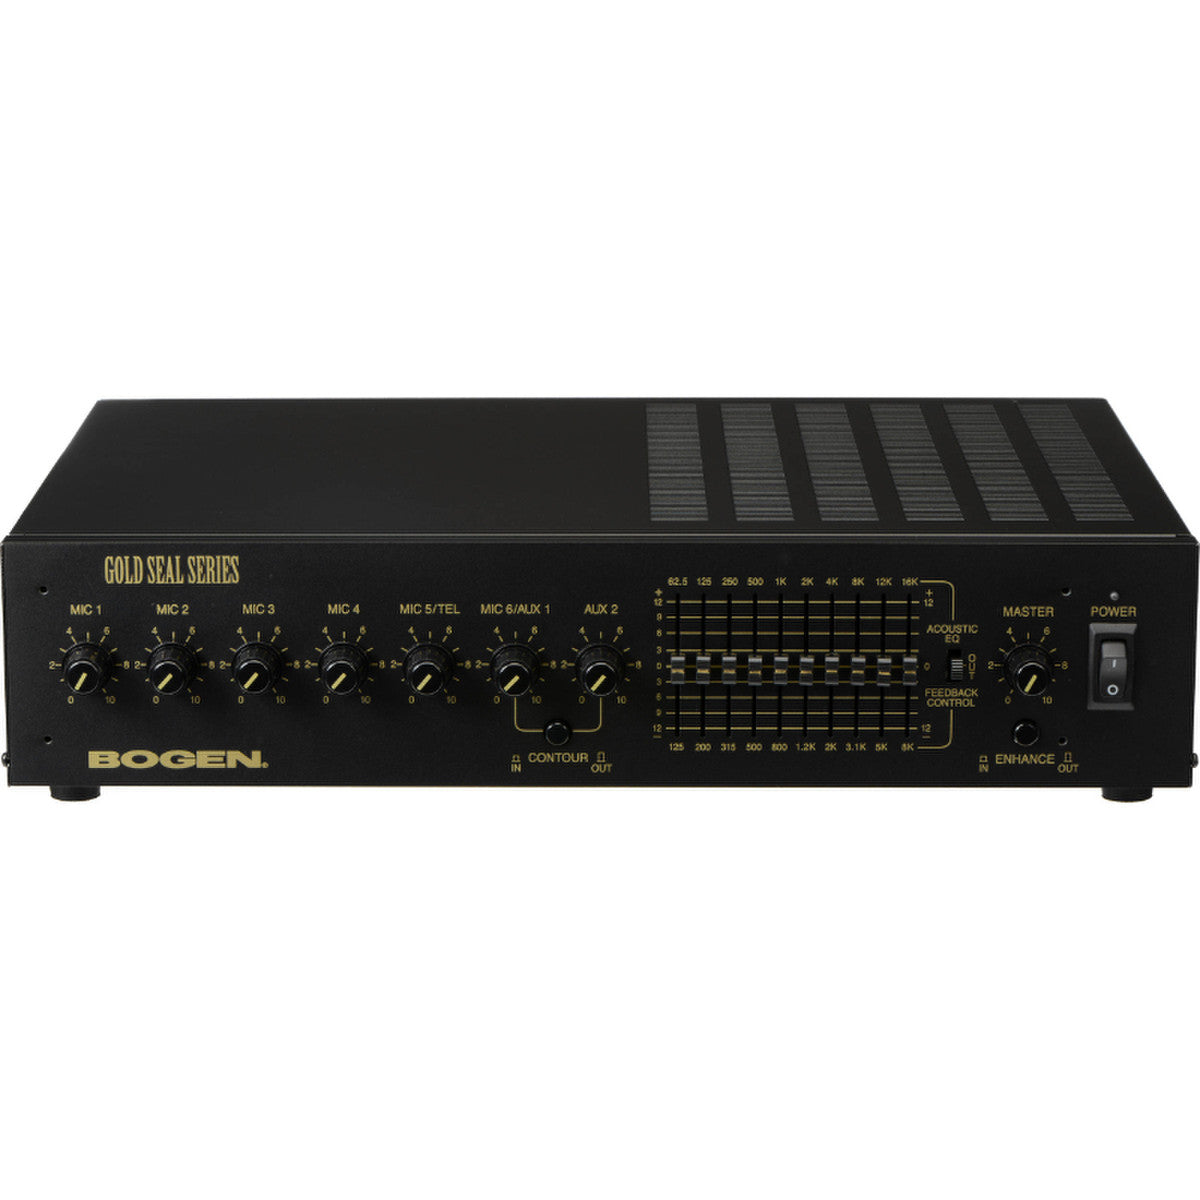 Bogen GS250D 250 Watt Gold Series Amplifier | Like New